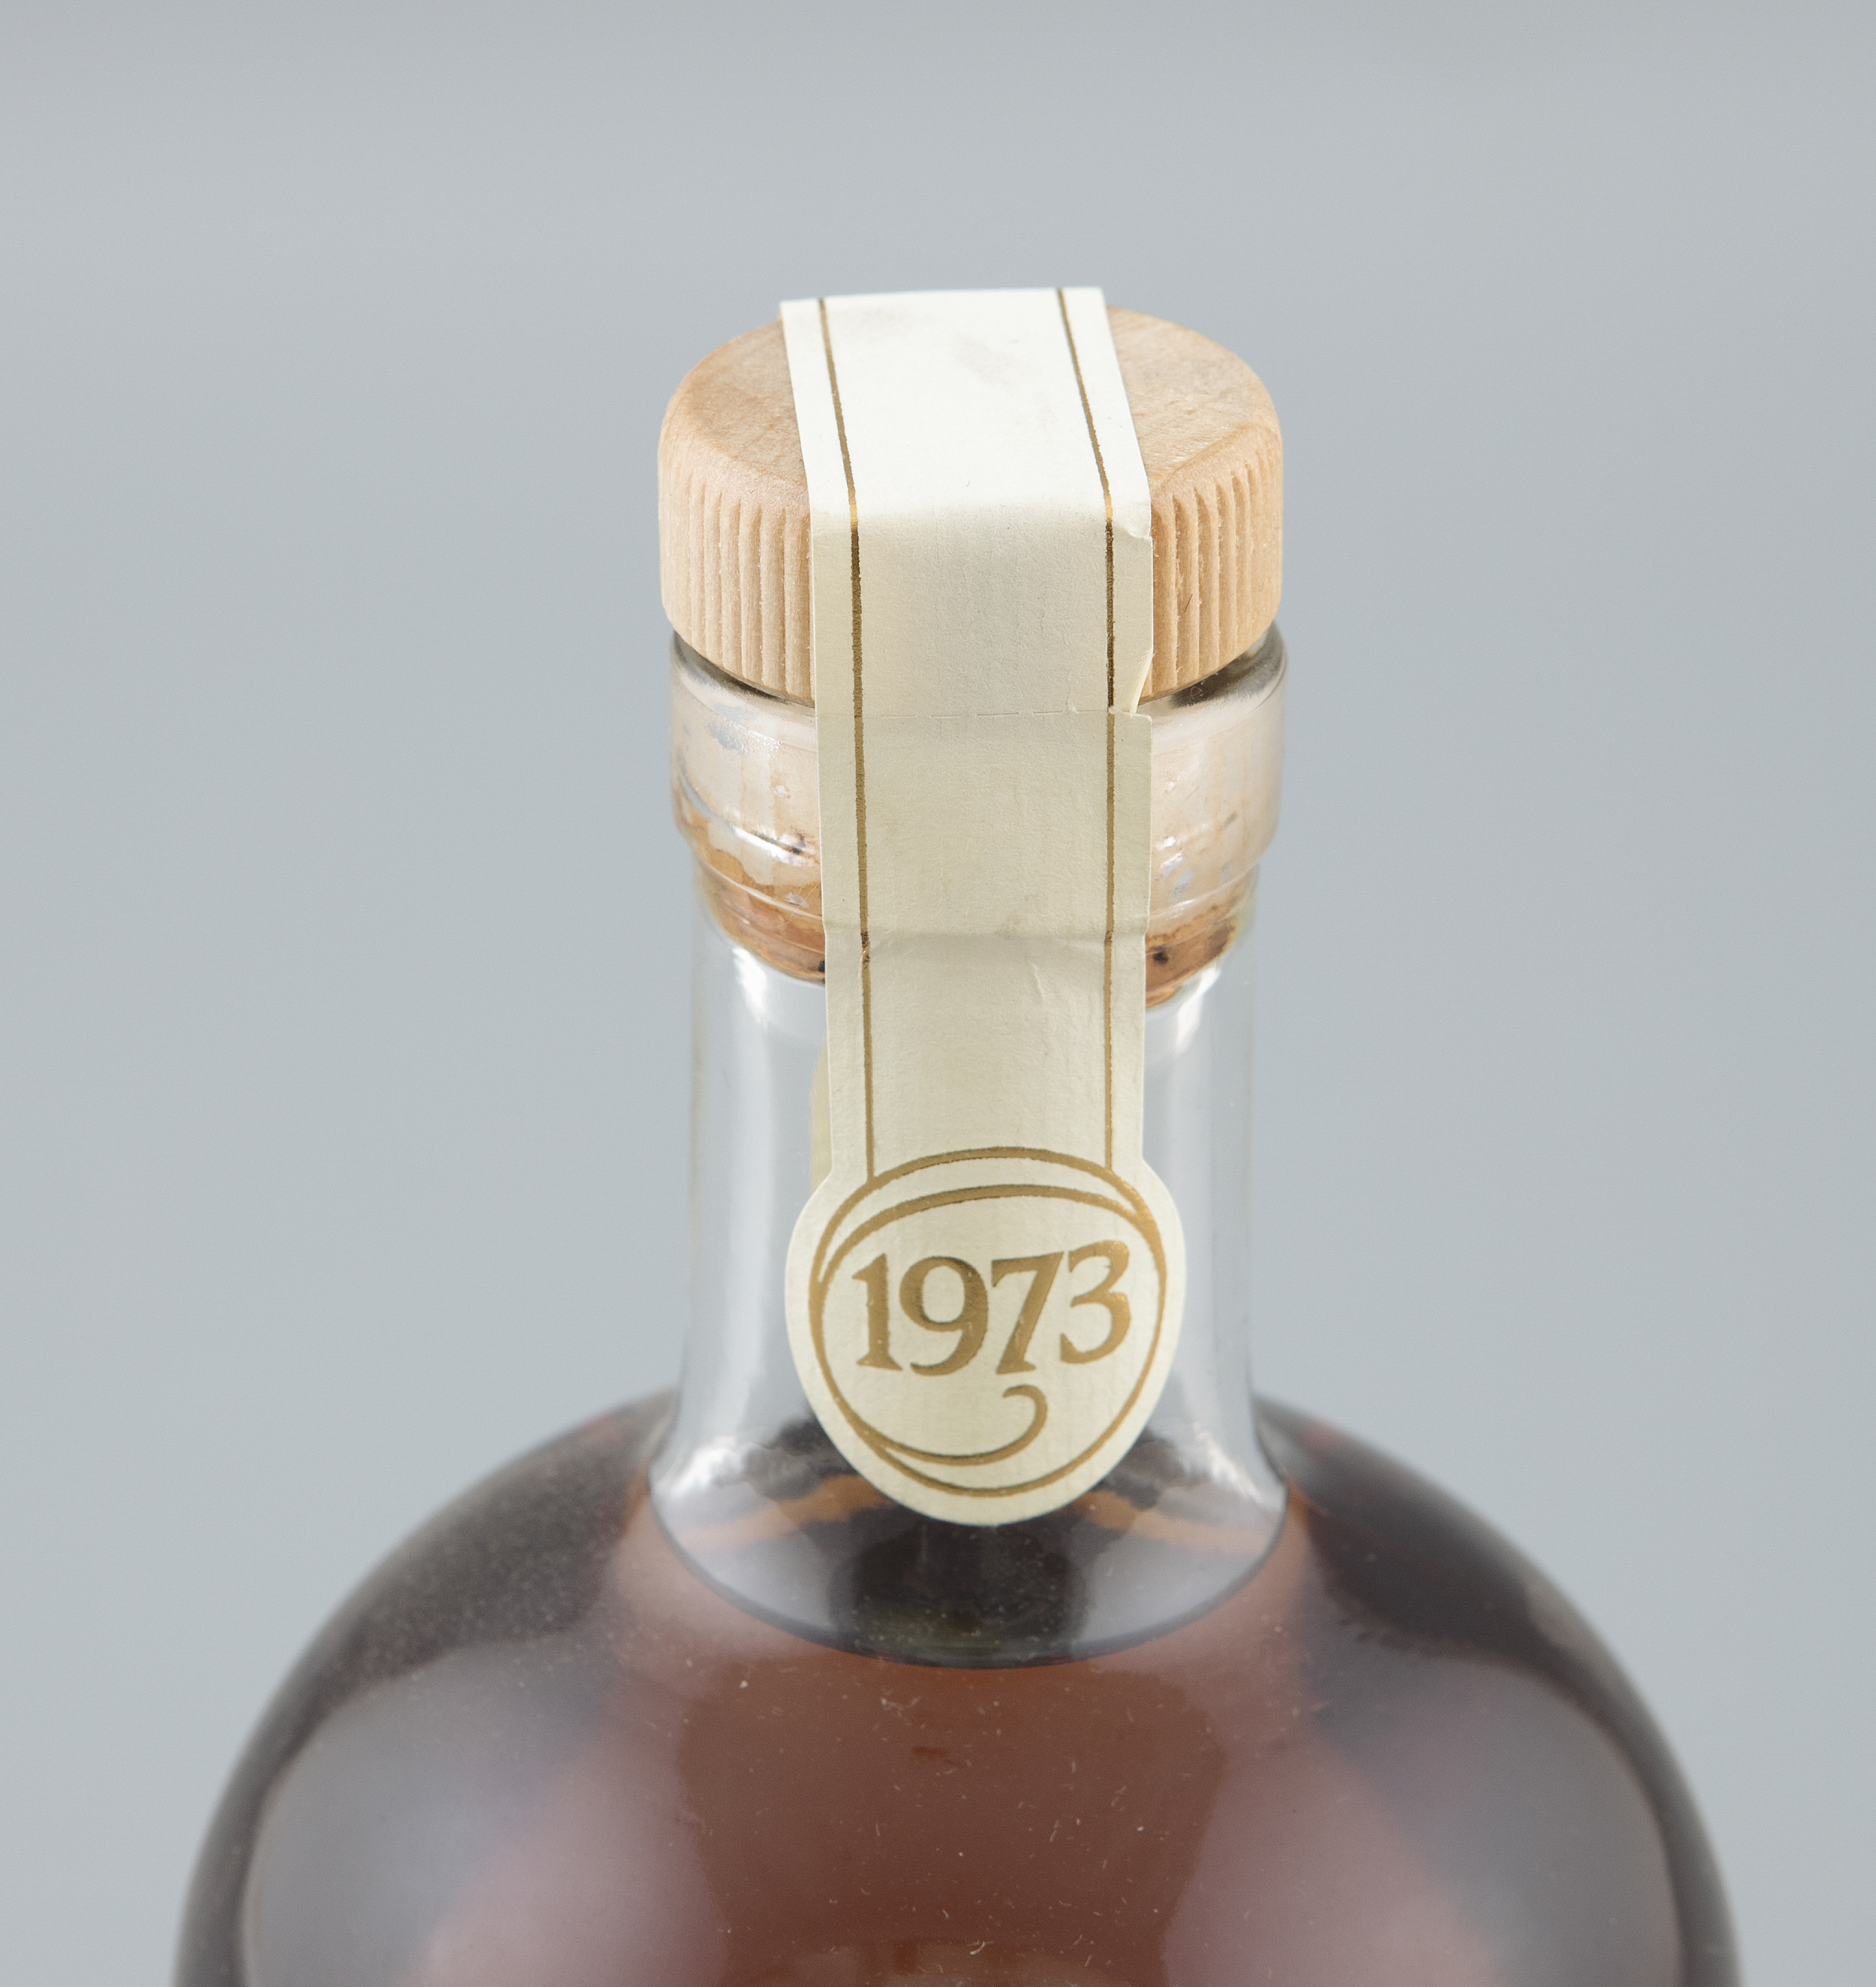 Midleton 25 Year Old Pure Pot Still Irish Whiskey 1 bottle in presentation case, bottle number 039 - Image 2 of 11